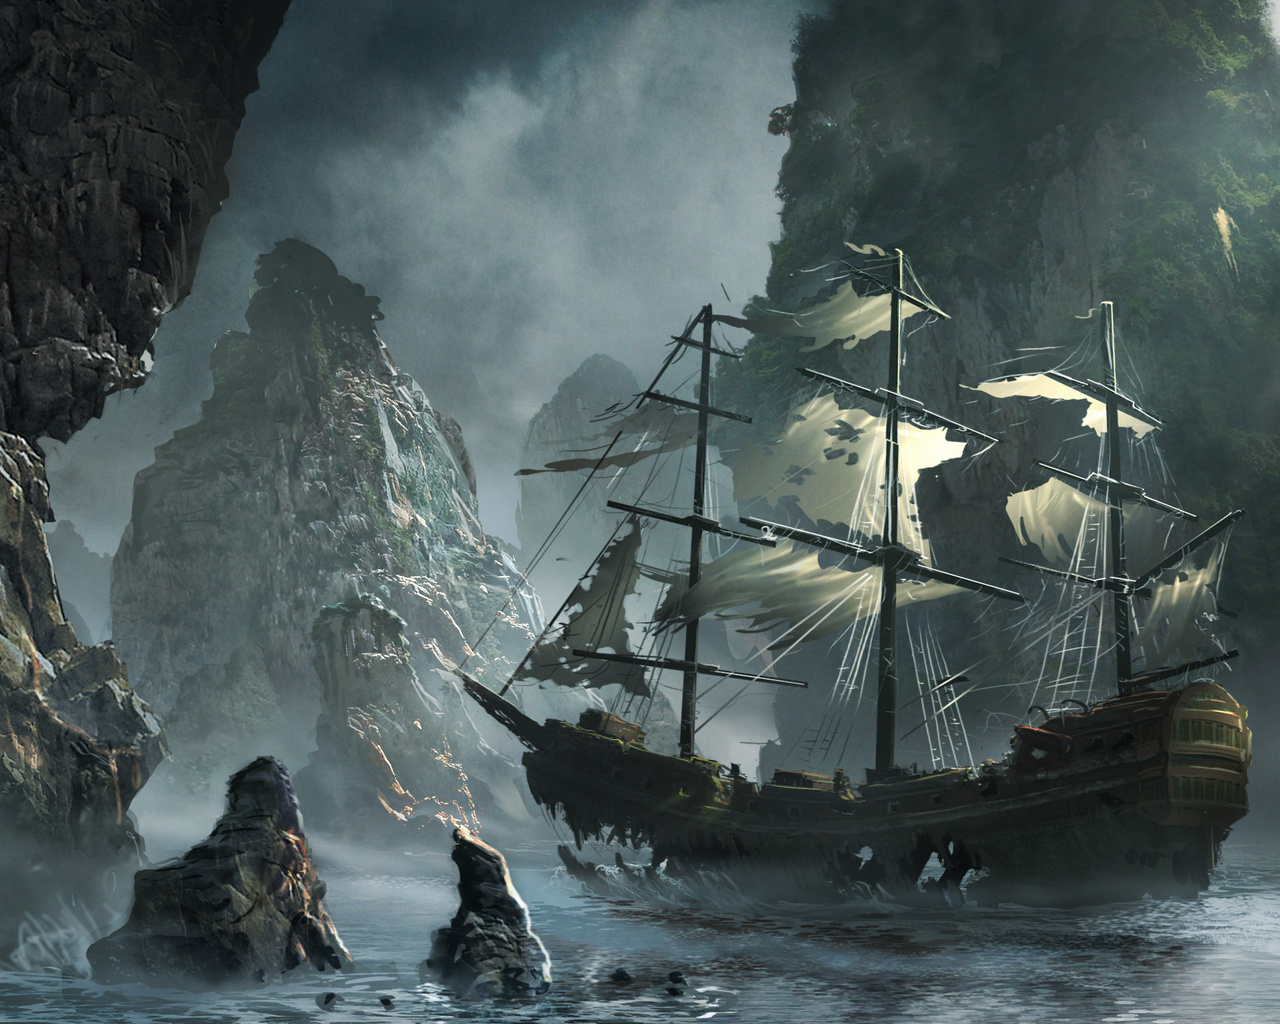 michal matczak, storm, the flying dutchman, Ghost ship approaching, matchack, art, rocks, sea